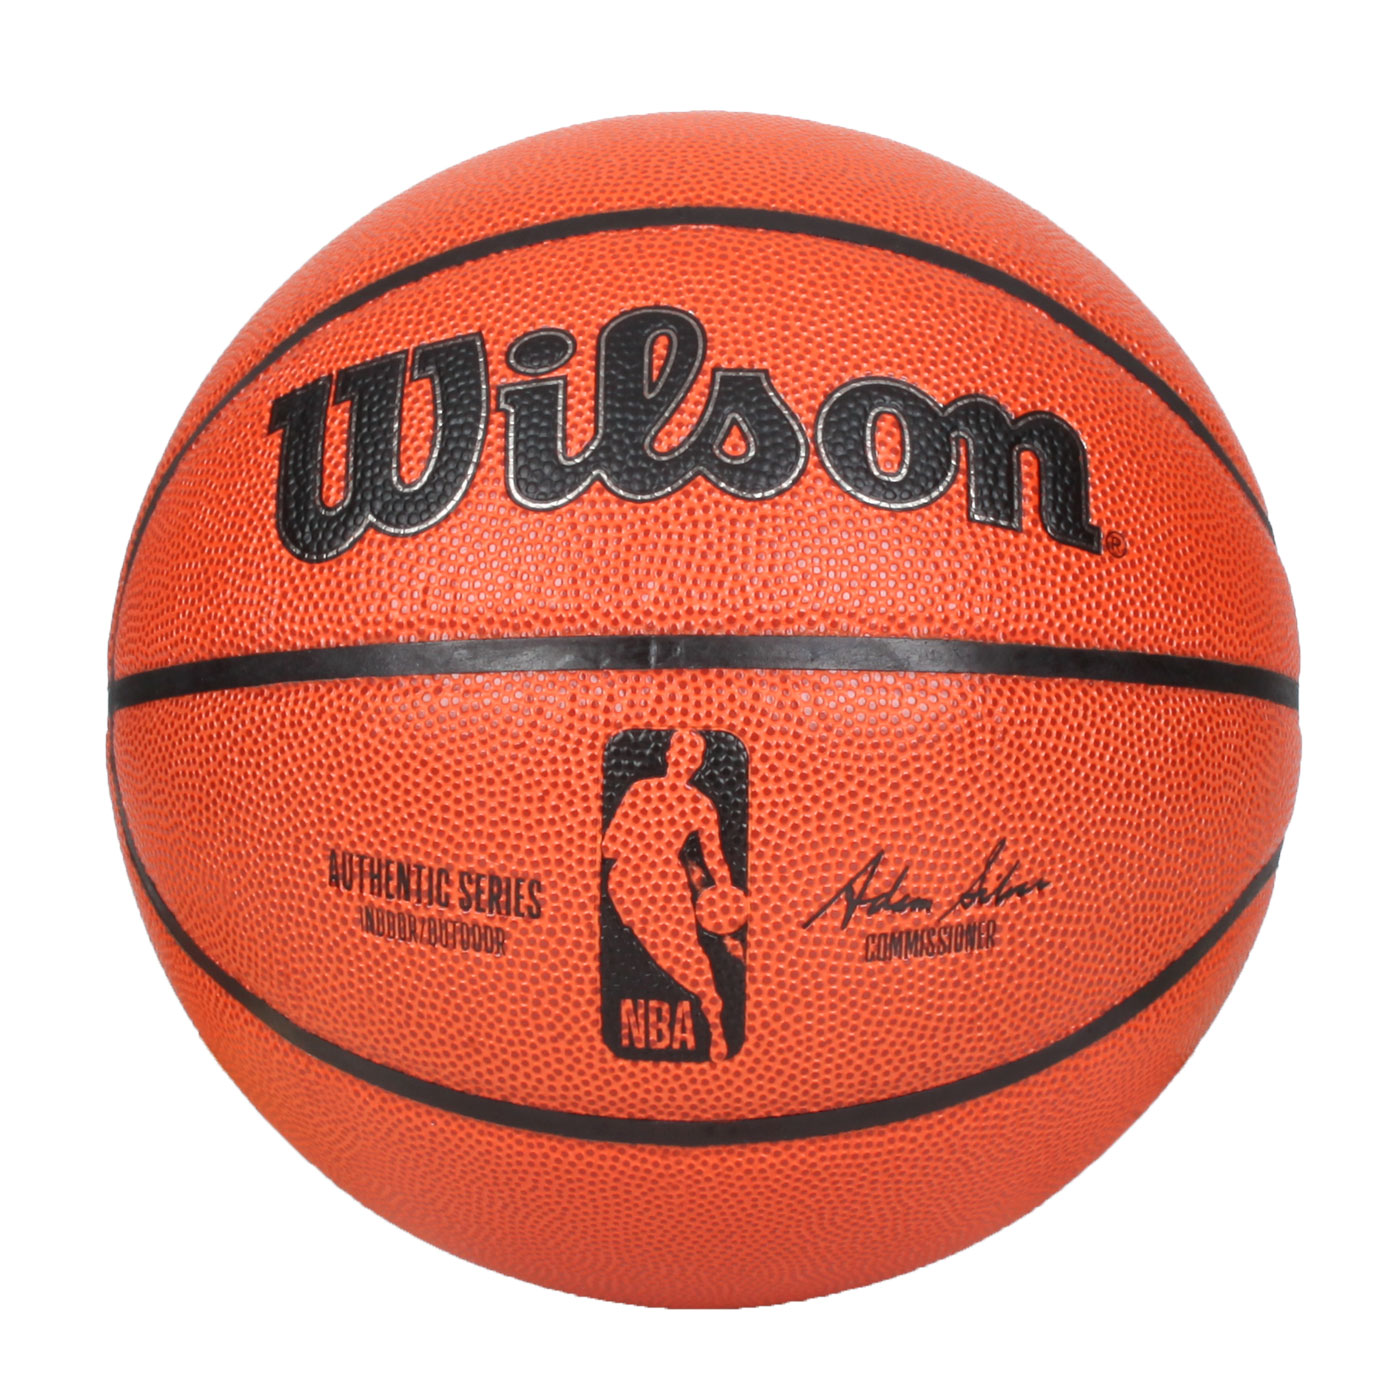 WILSON NBA AUTH系列 合成皮籃球 #7 WTB7200XB07 - 暗橘黑炫綠